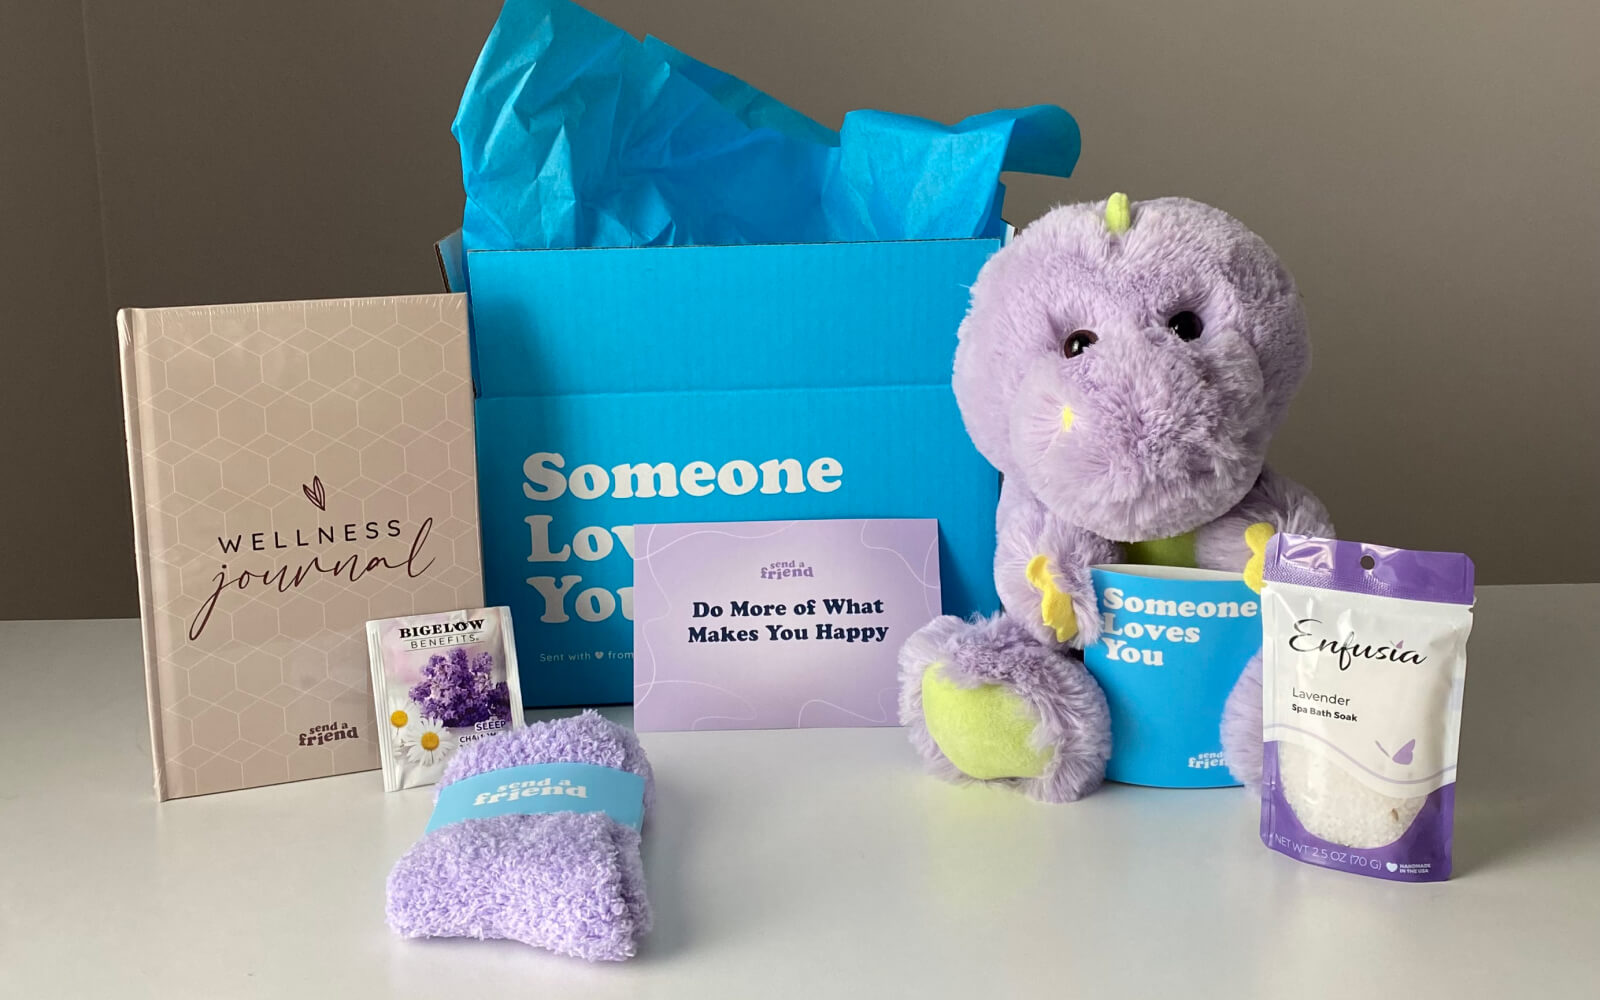 a purple stuffed dinosaur surround by self care items